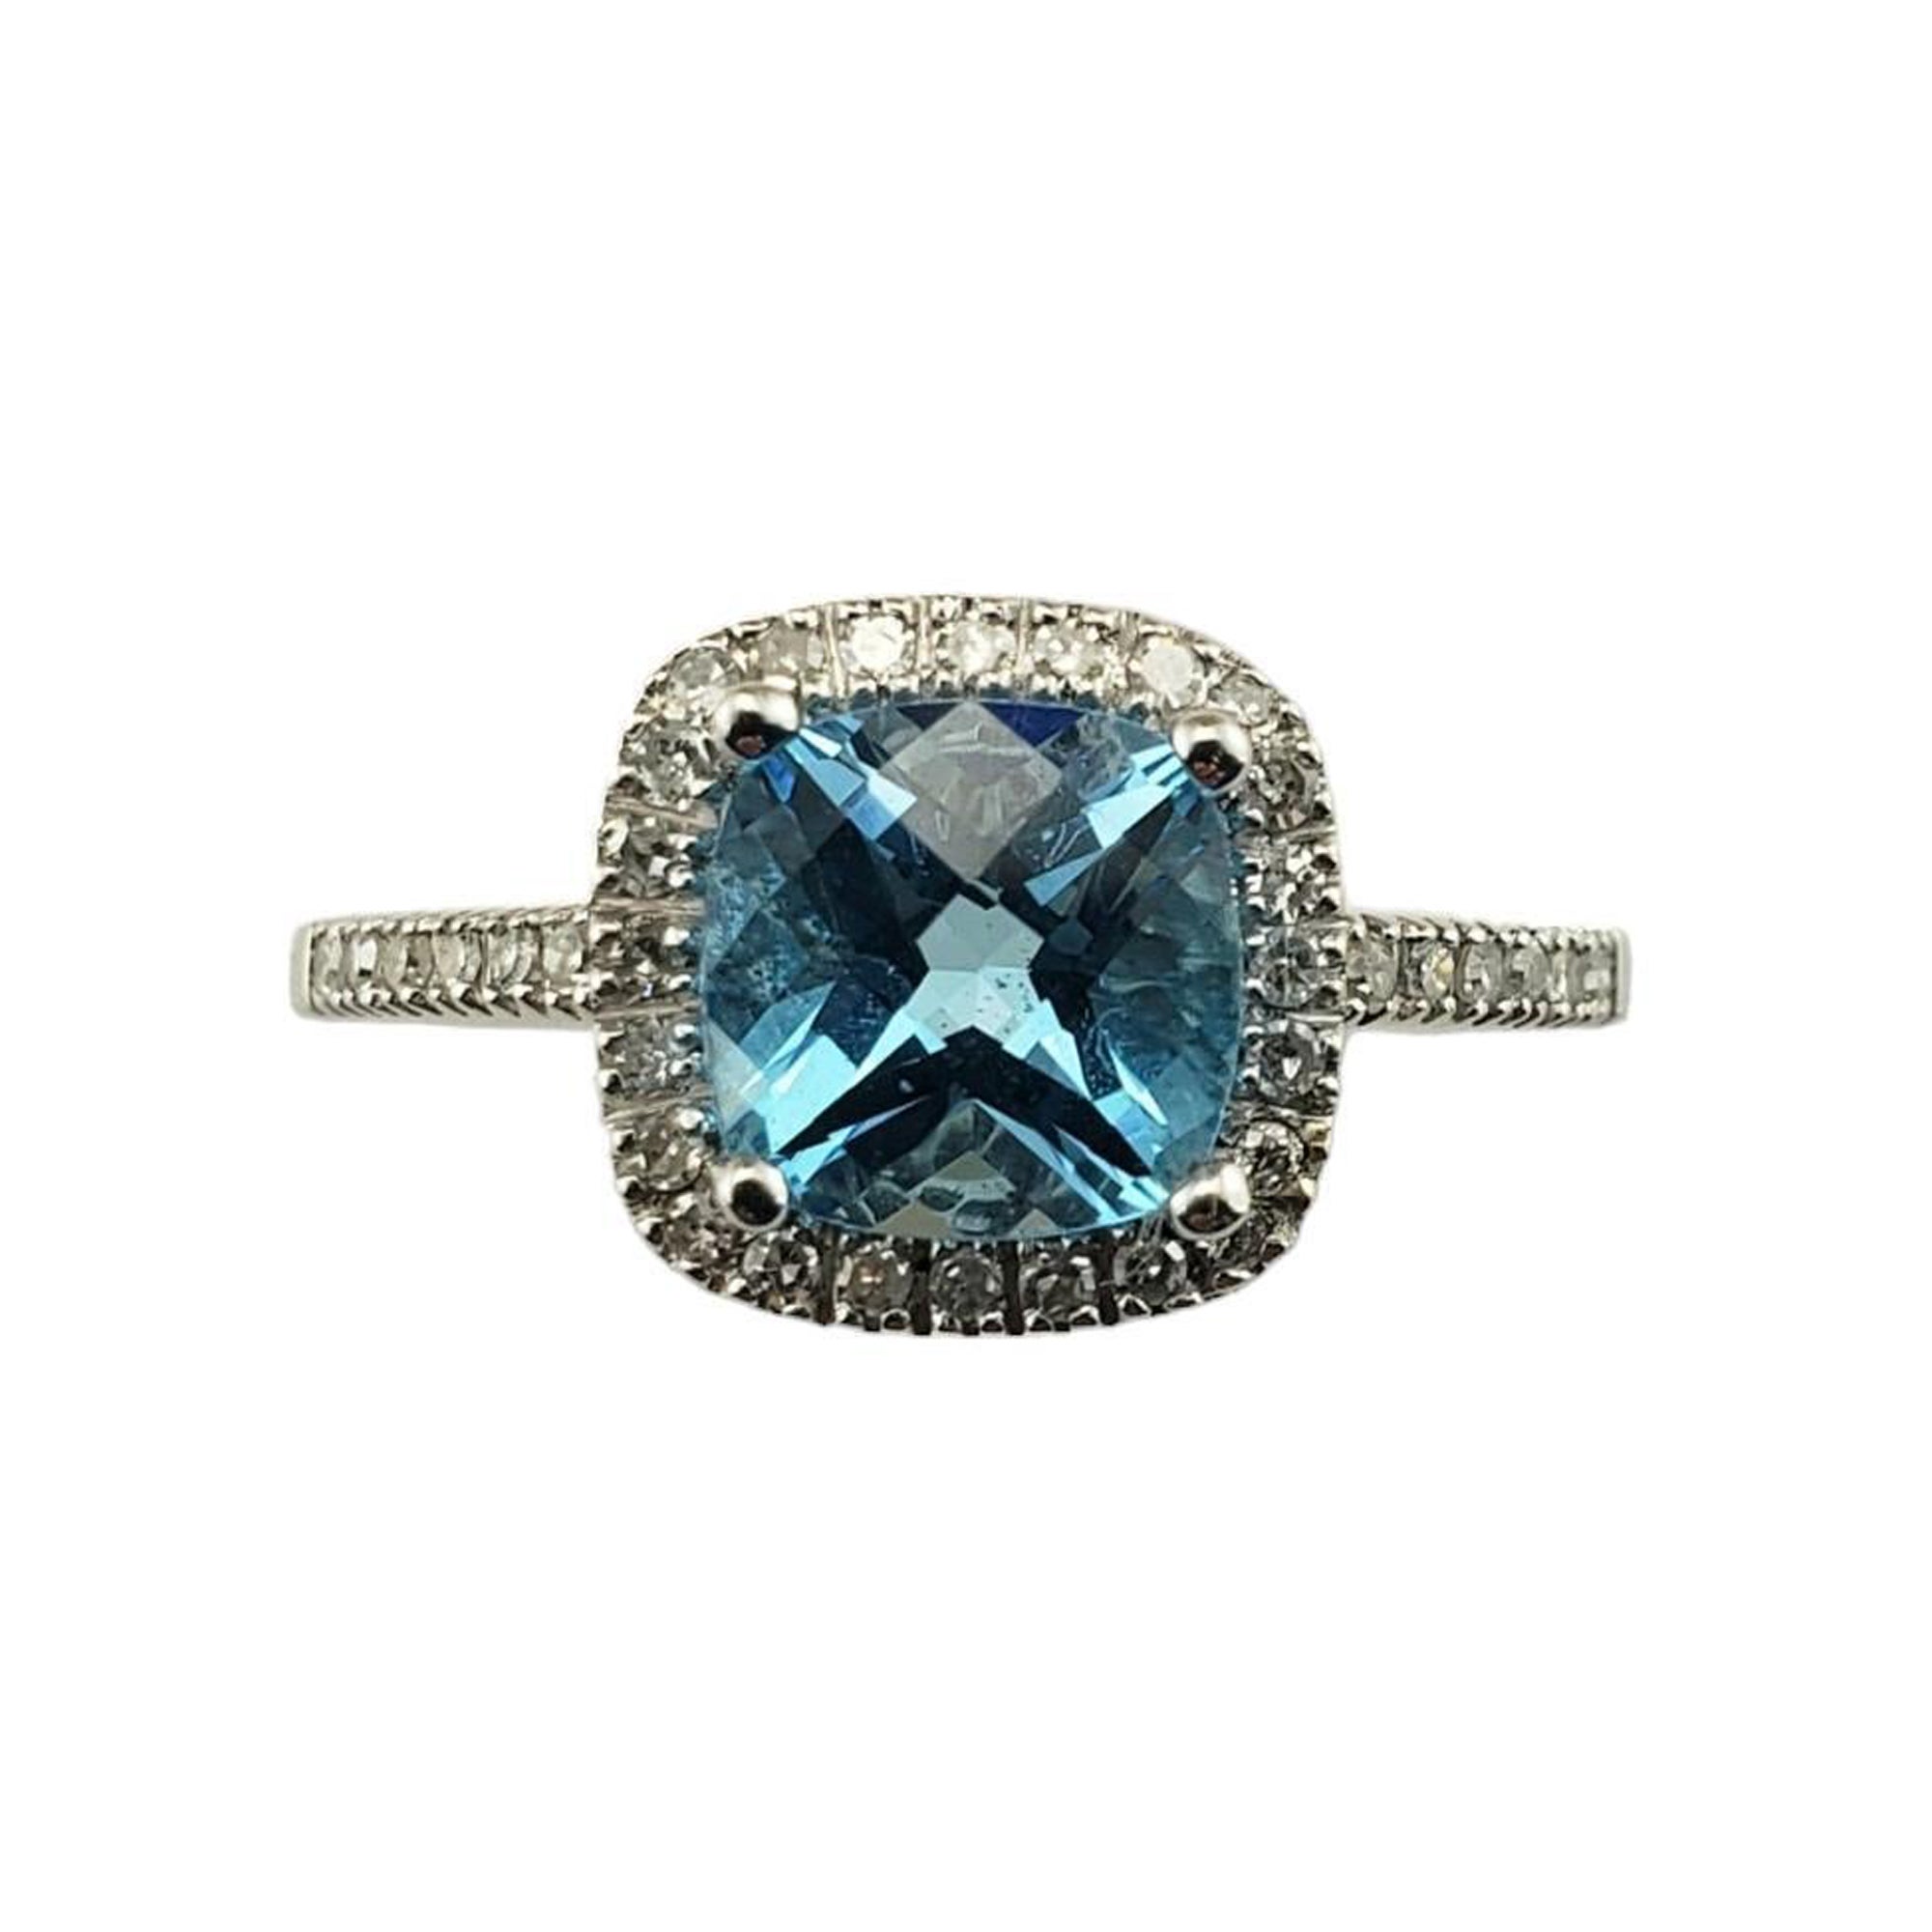 14 Karat White Gold Blue Topaz and Diamond Ring Size 6.25 #15638